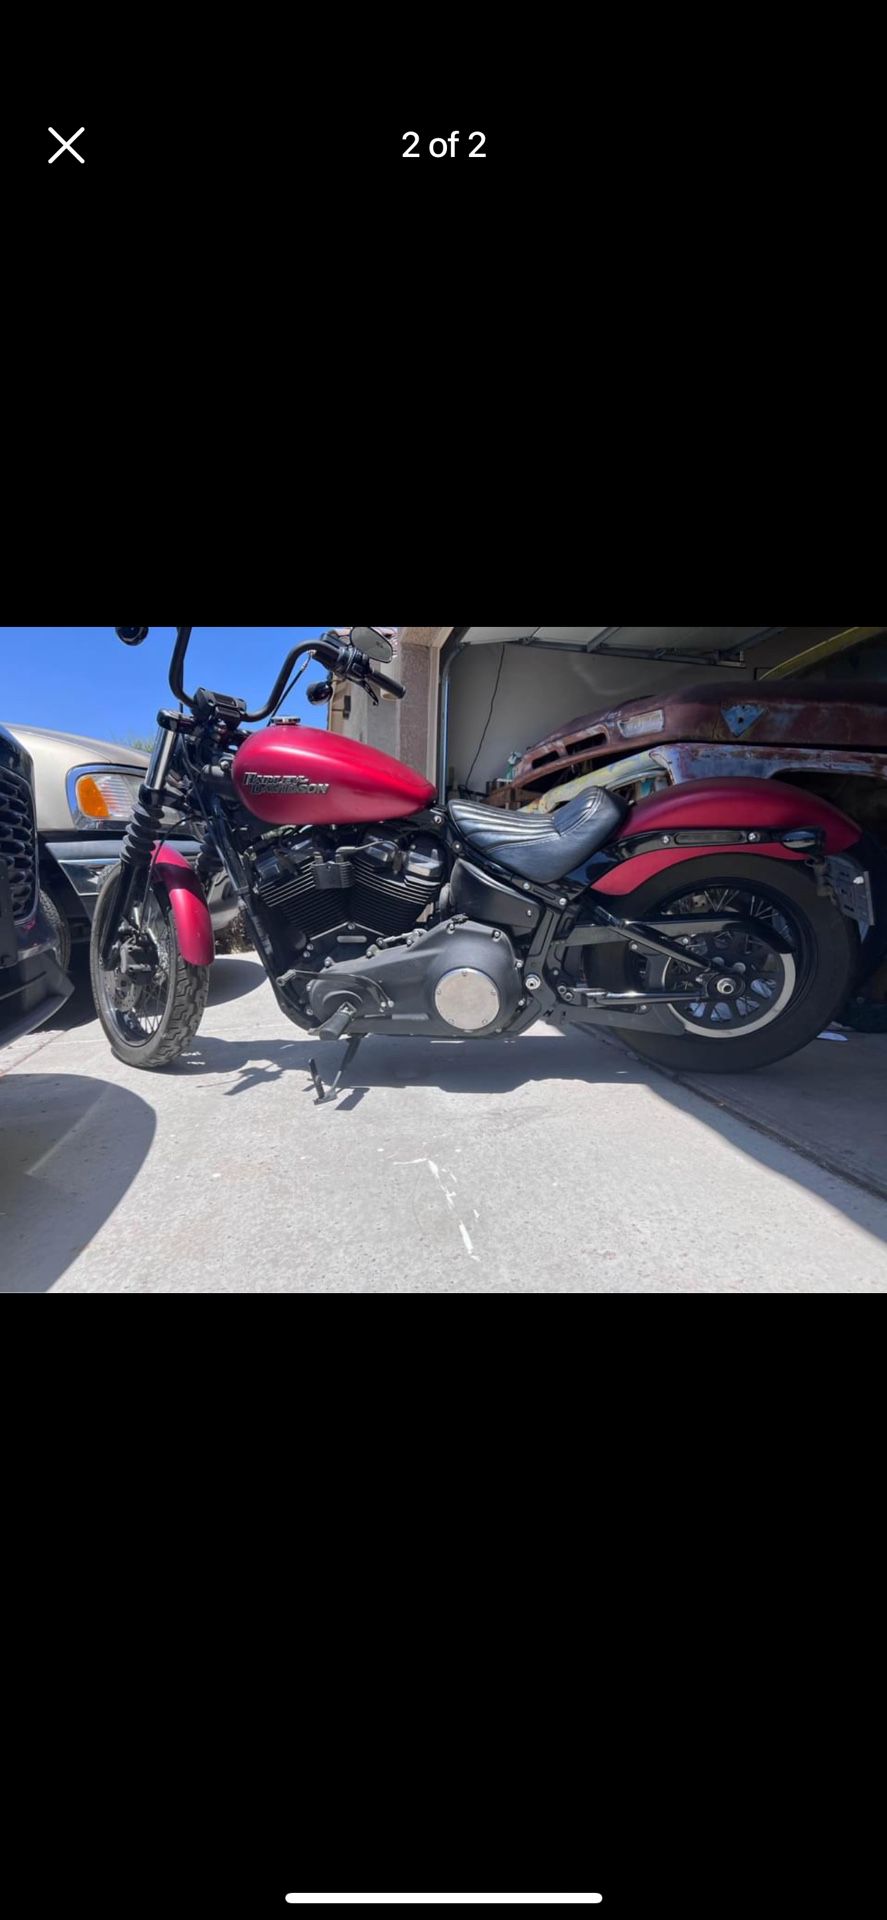 2019 Harley D Streetbob Softtail